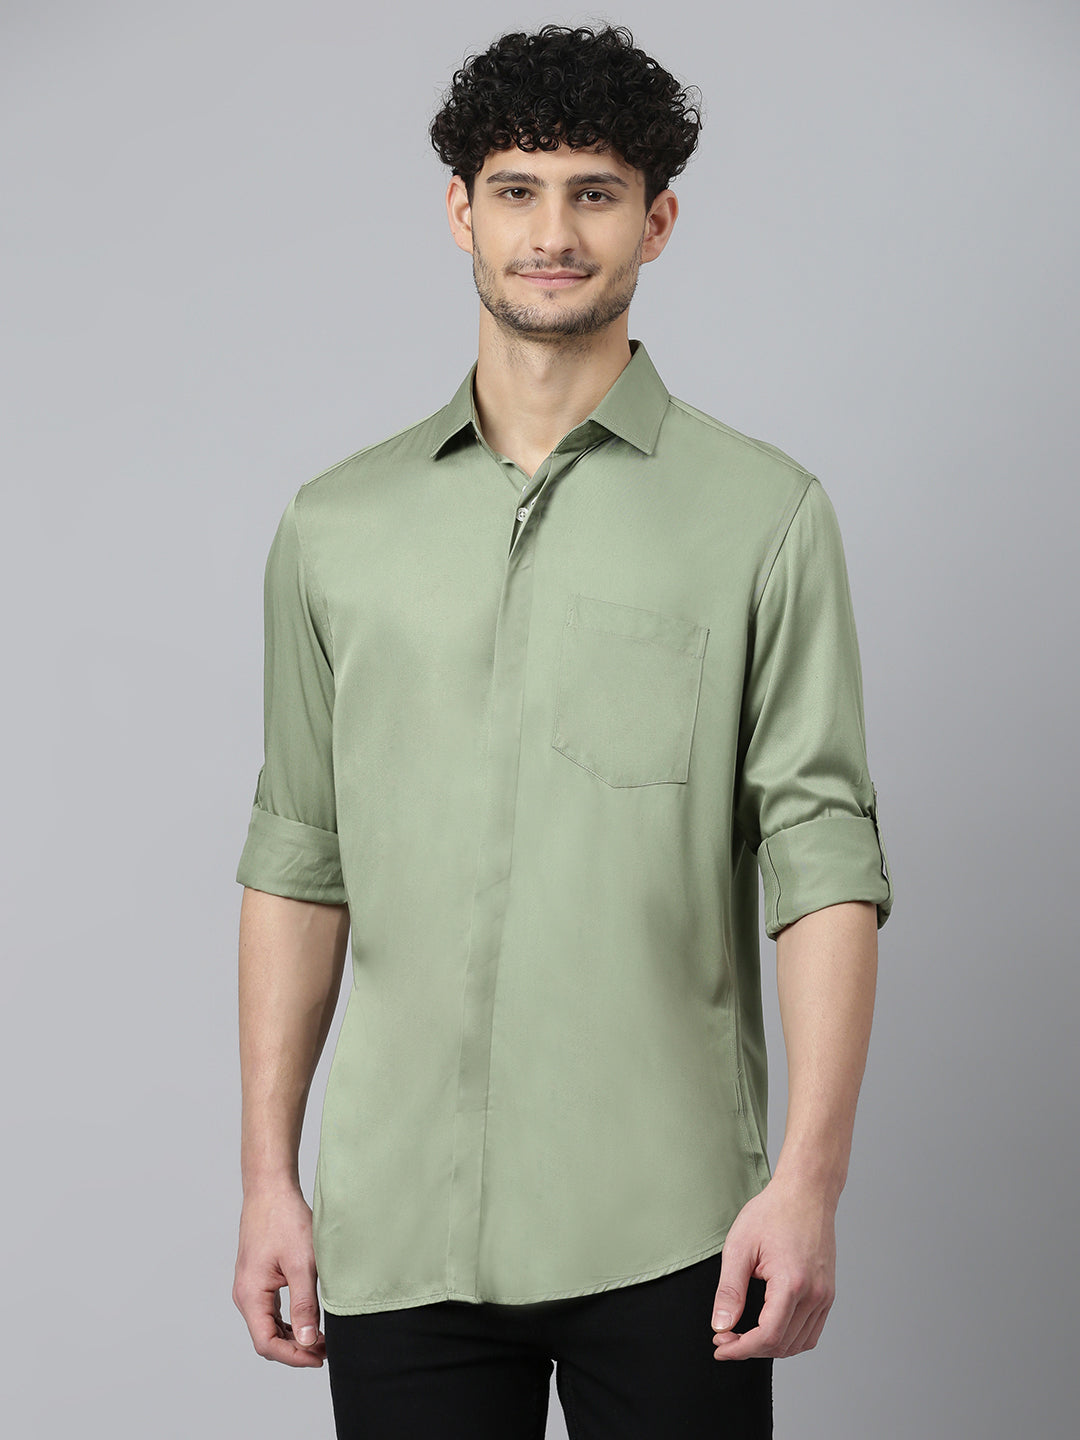 Don Vino Men's Pastel Green Solid Slim Fit Shirt